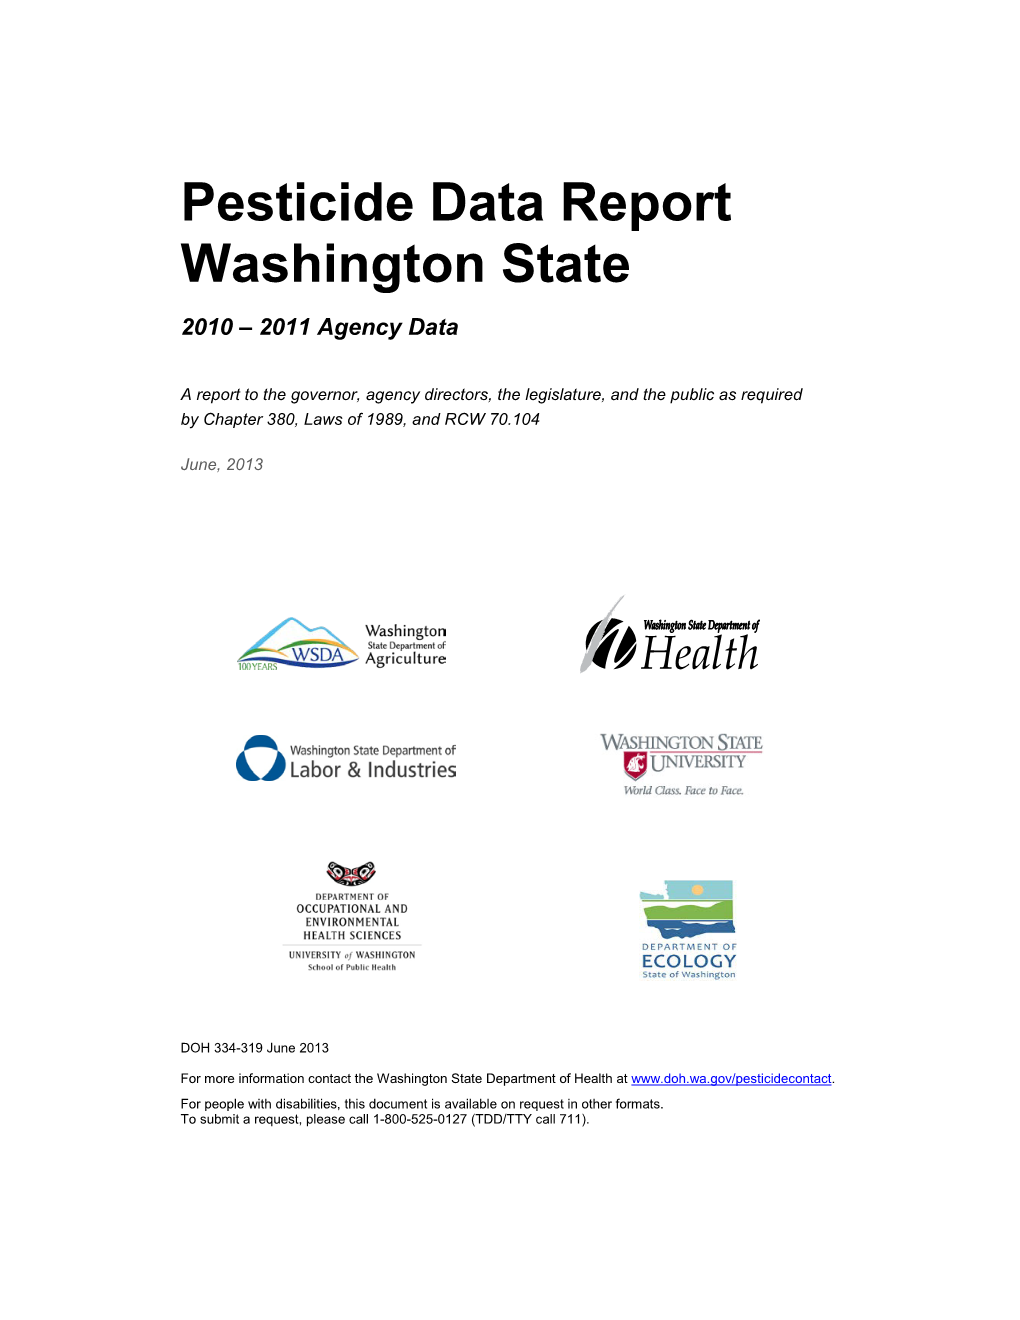 Pesticide Data Report Washington State 2010 – 2011 Agency Data